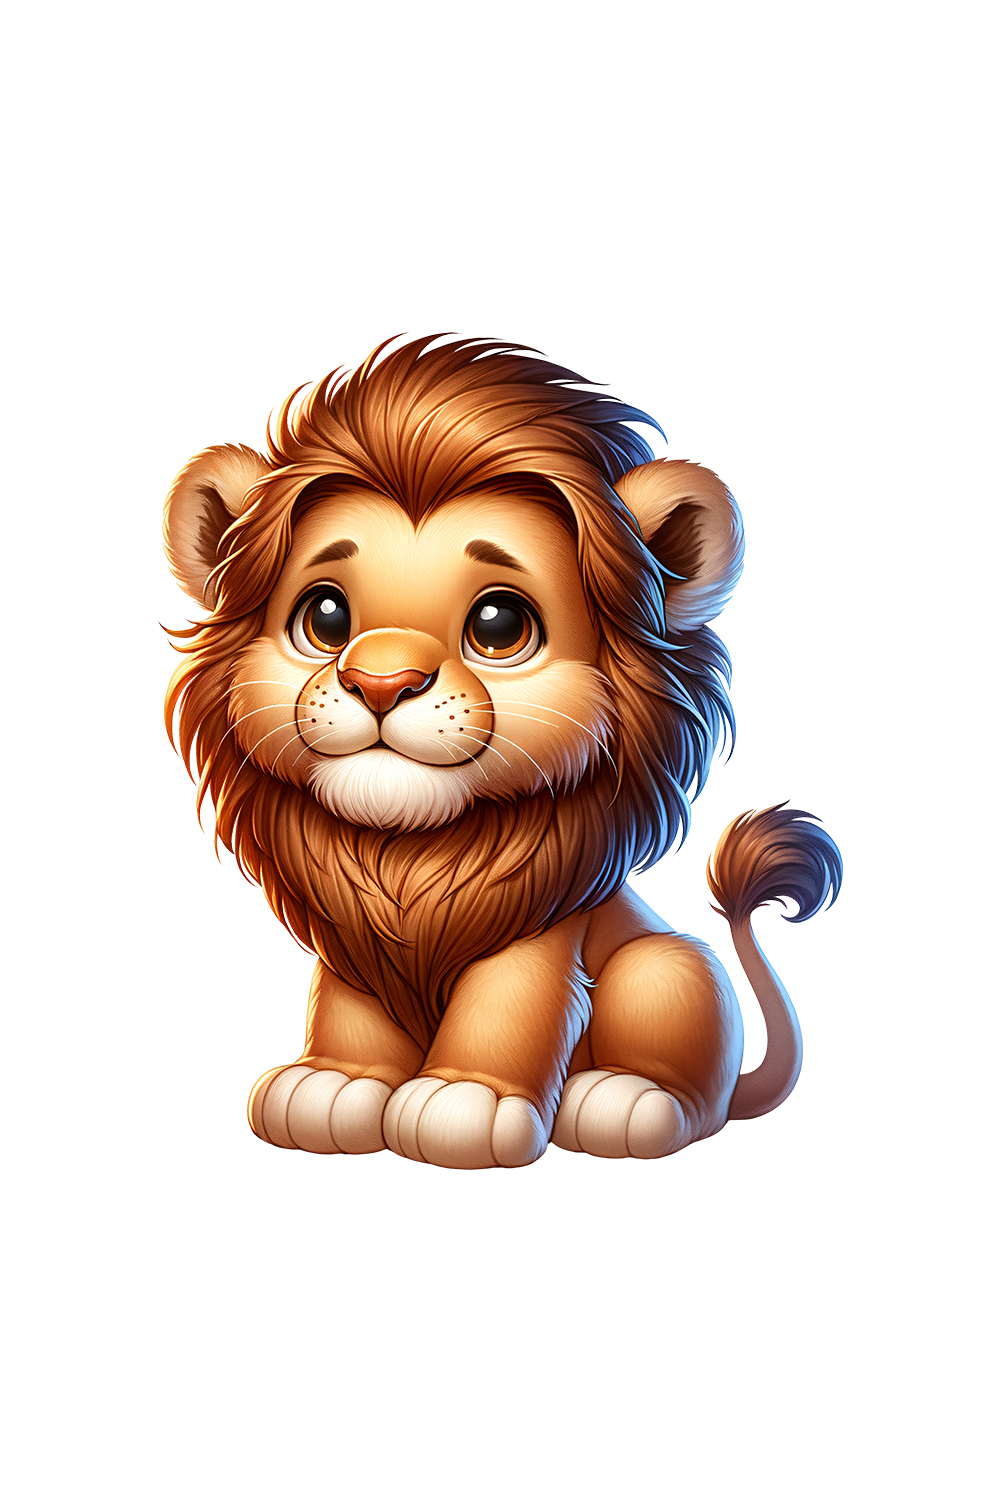 Cute Lion Clipart | Animals Clipart | PNG pinterest preview image.